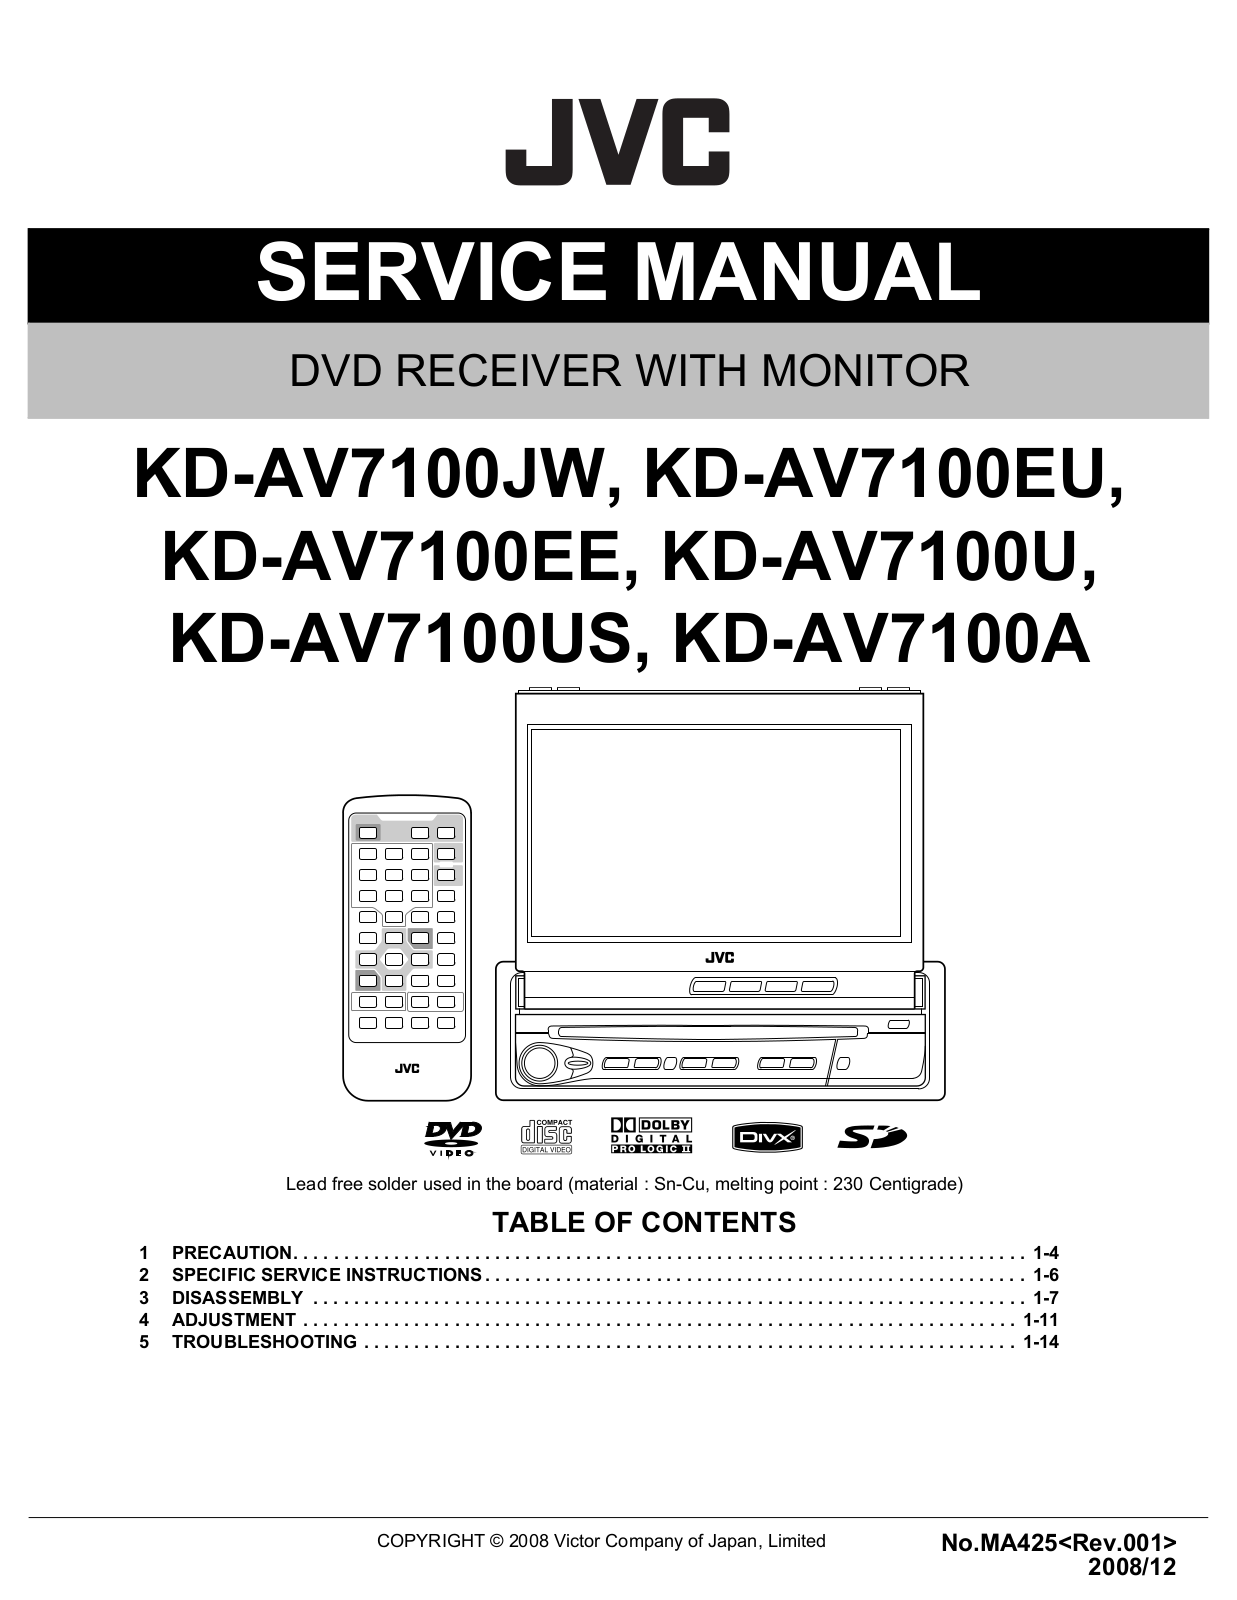 JVC KD-AV7100JW, KD-AV7100EU, KD-AV7100EE, KD-AV7100U, KD-AV7100US Service Manual